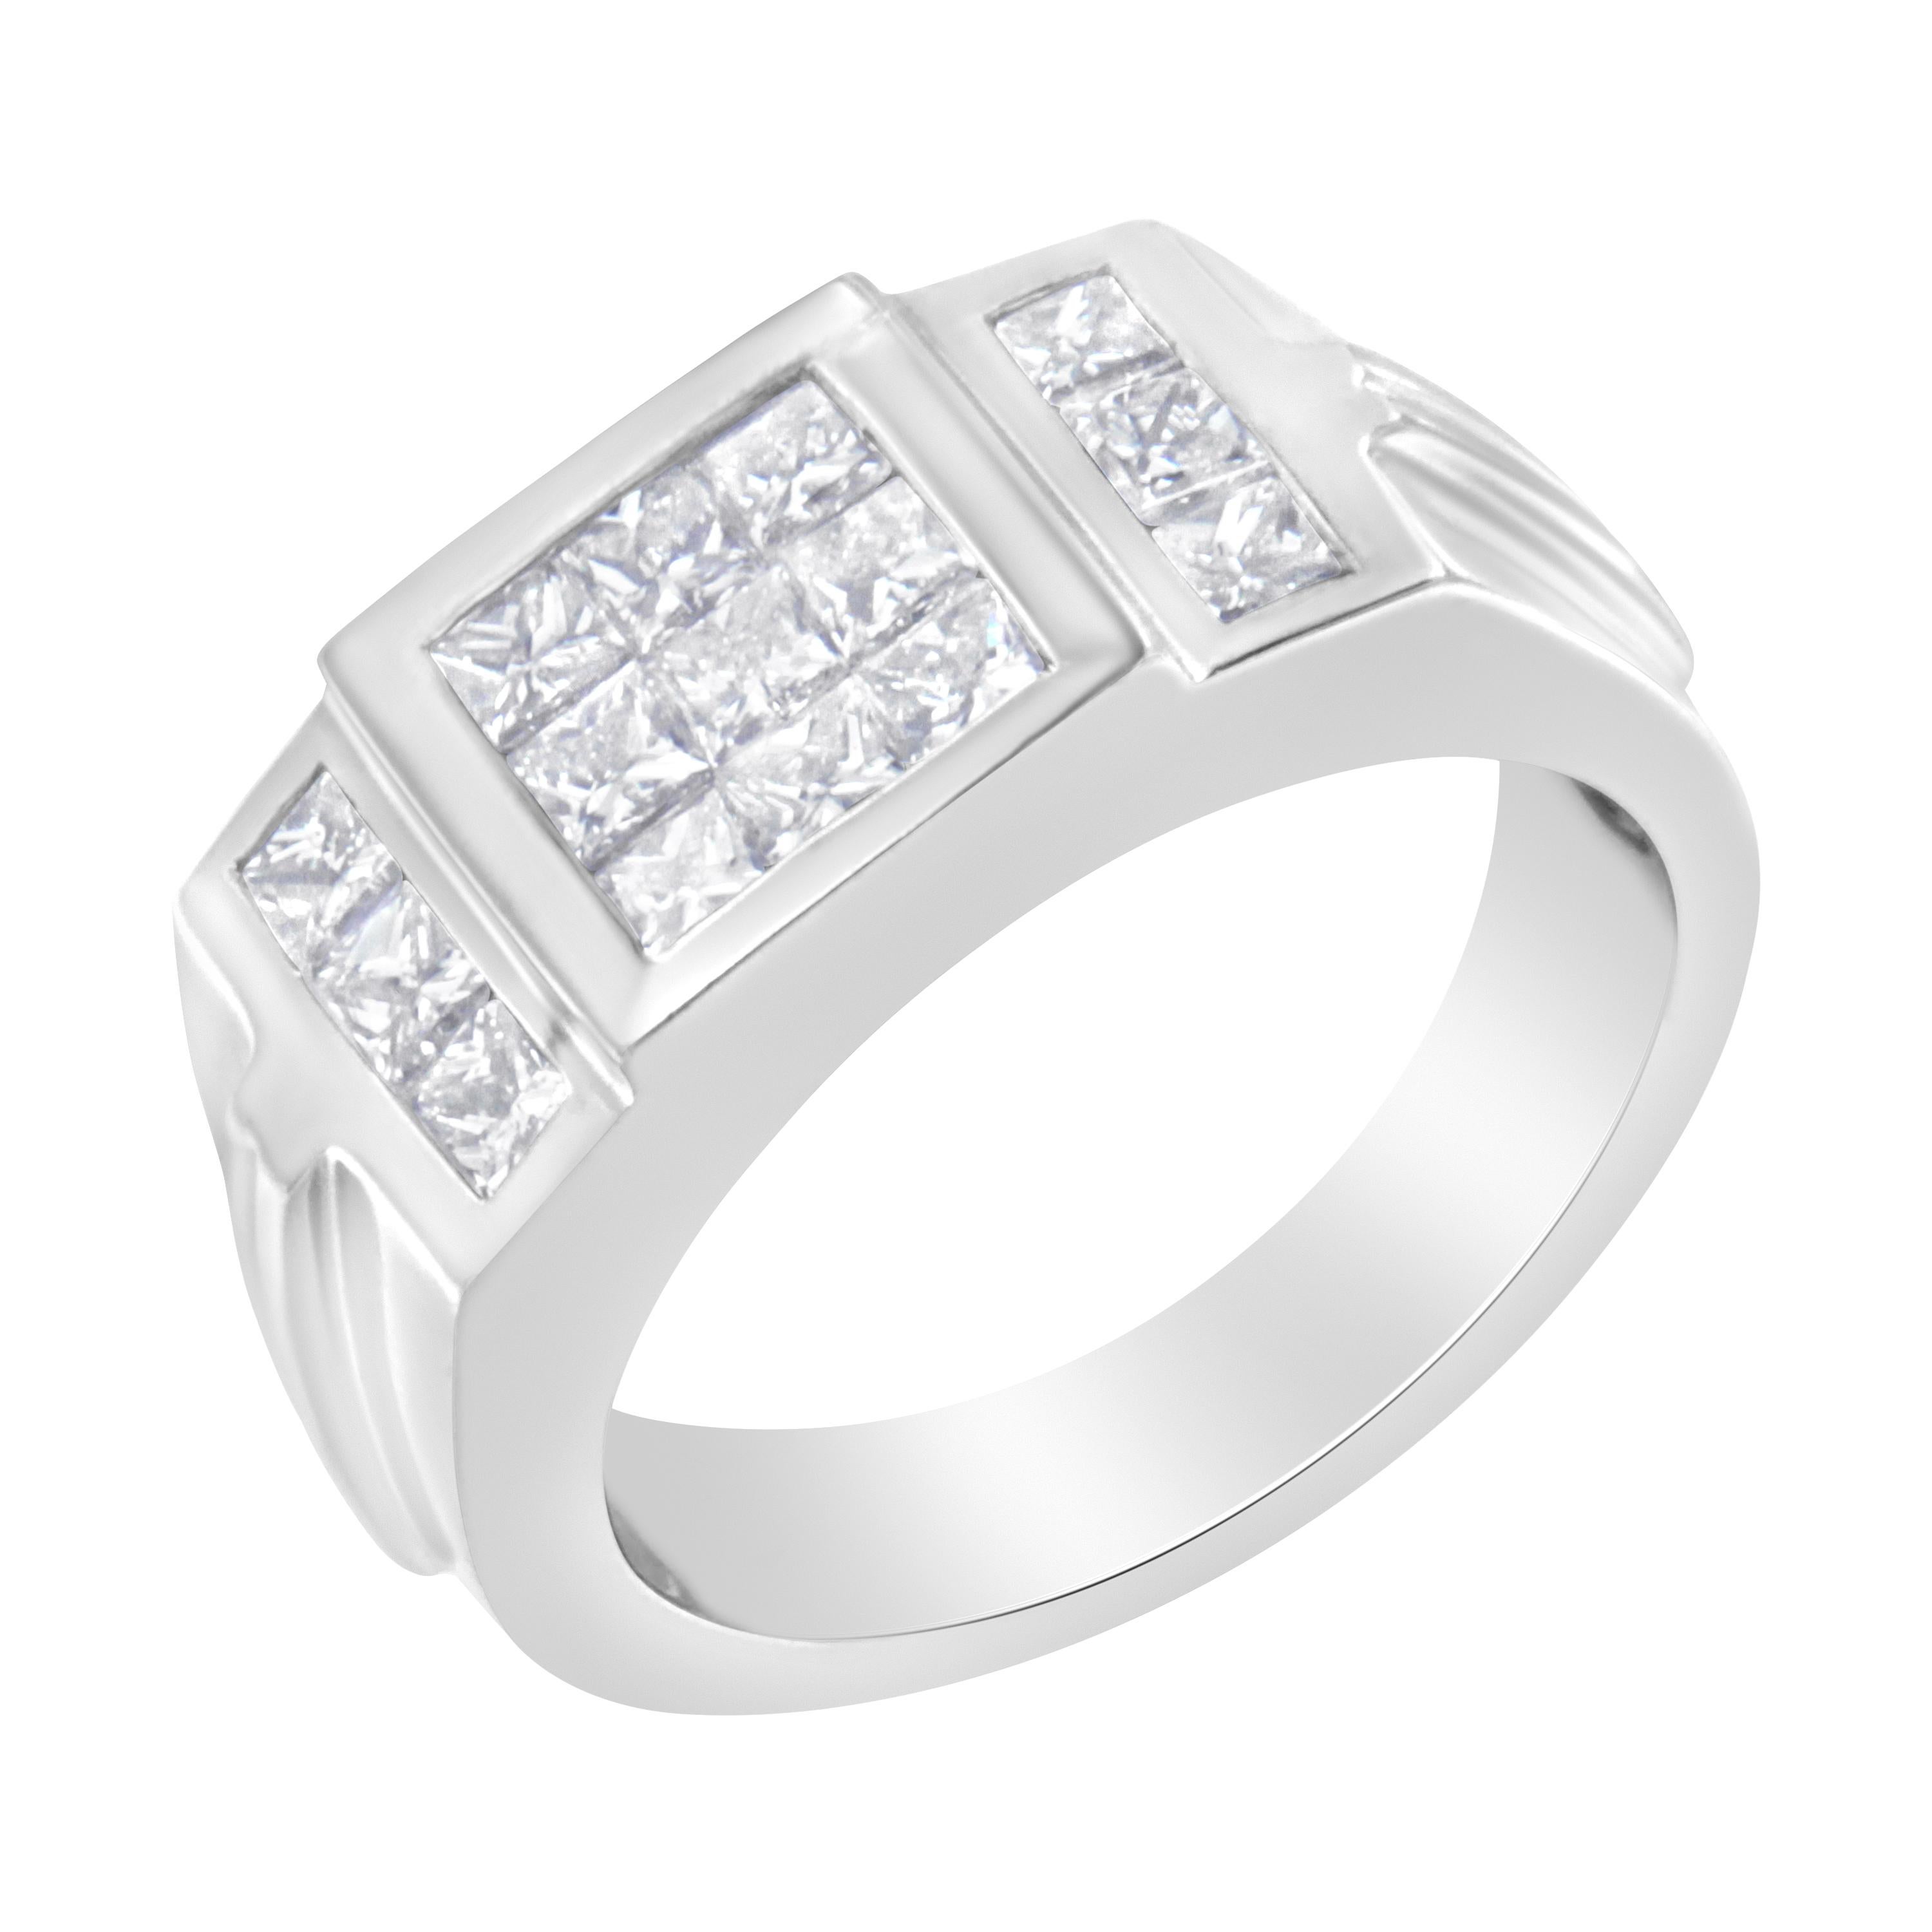 Contemporary Men's 14K White Gold 2.0 Carat Diamond Cluster Ring For Sale